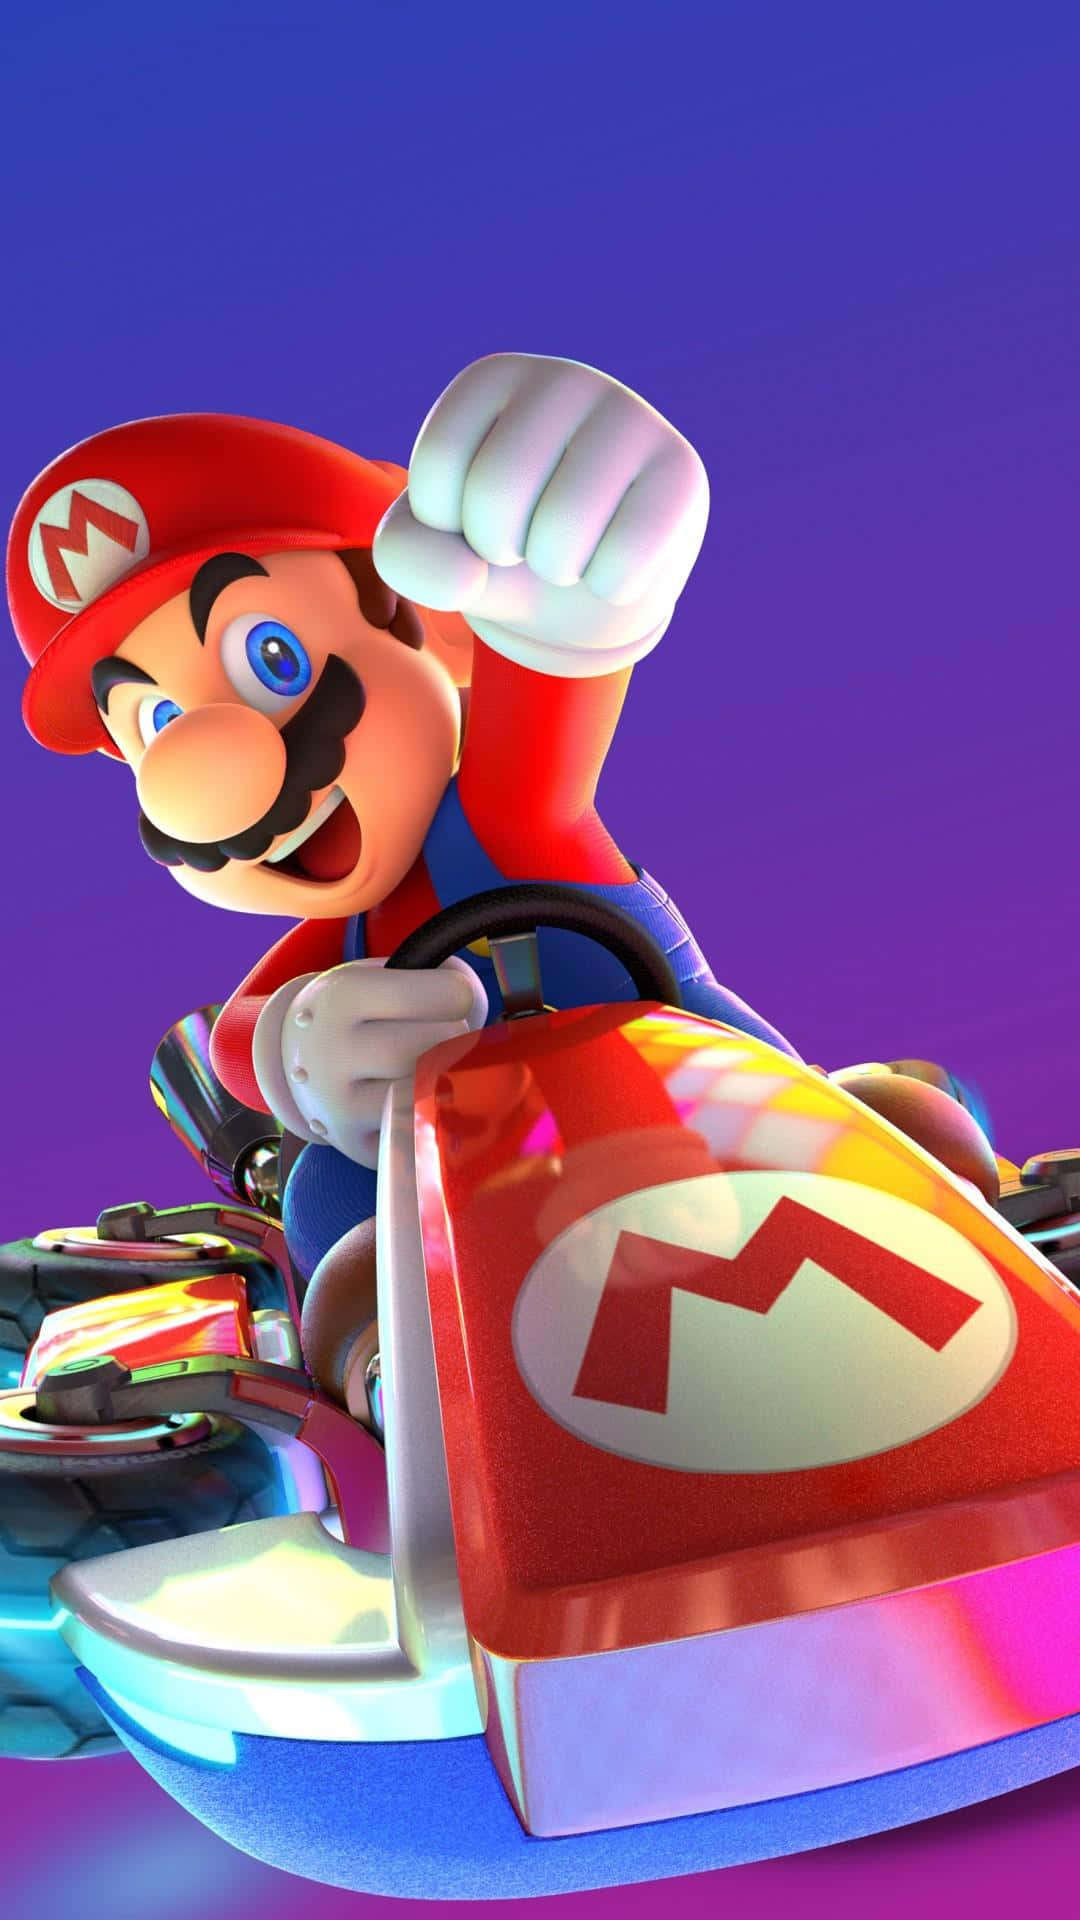 The Iconic Mario Of Super Mario Bros. Fame Background